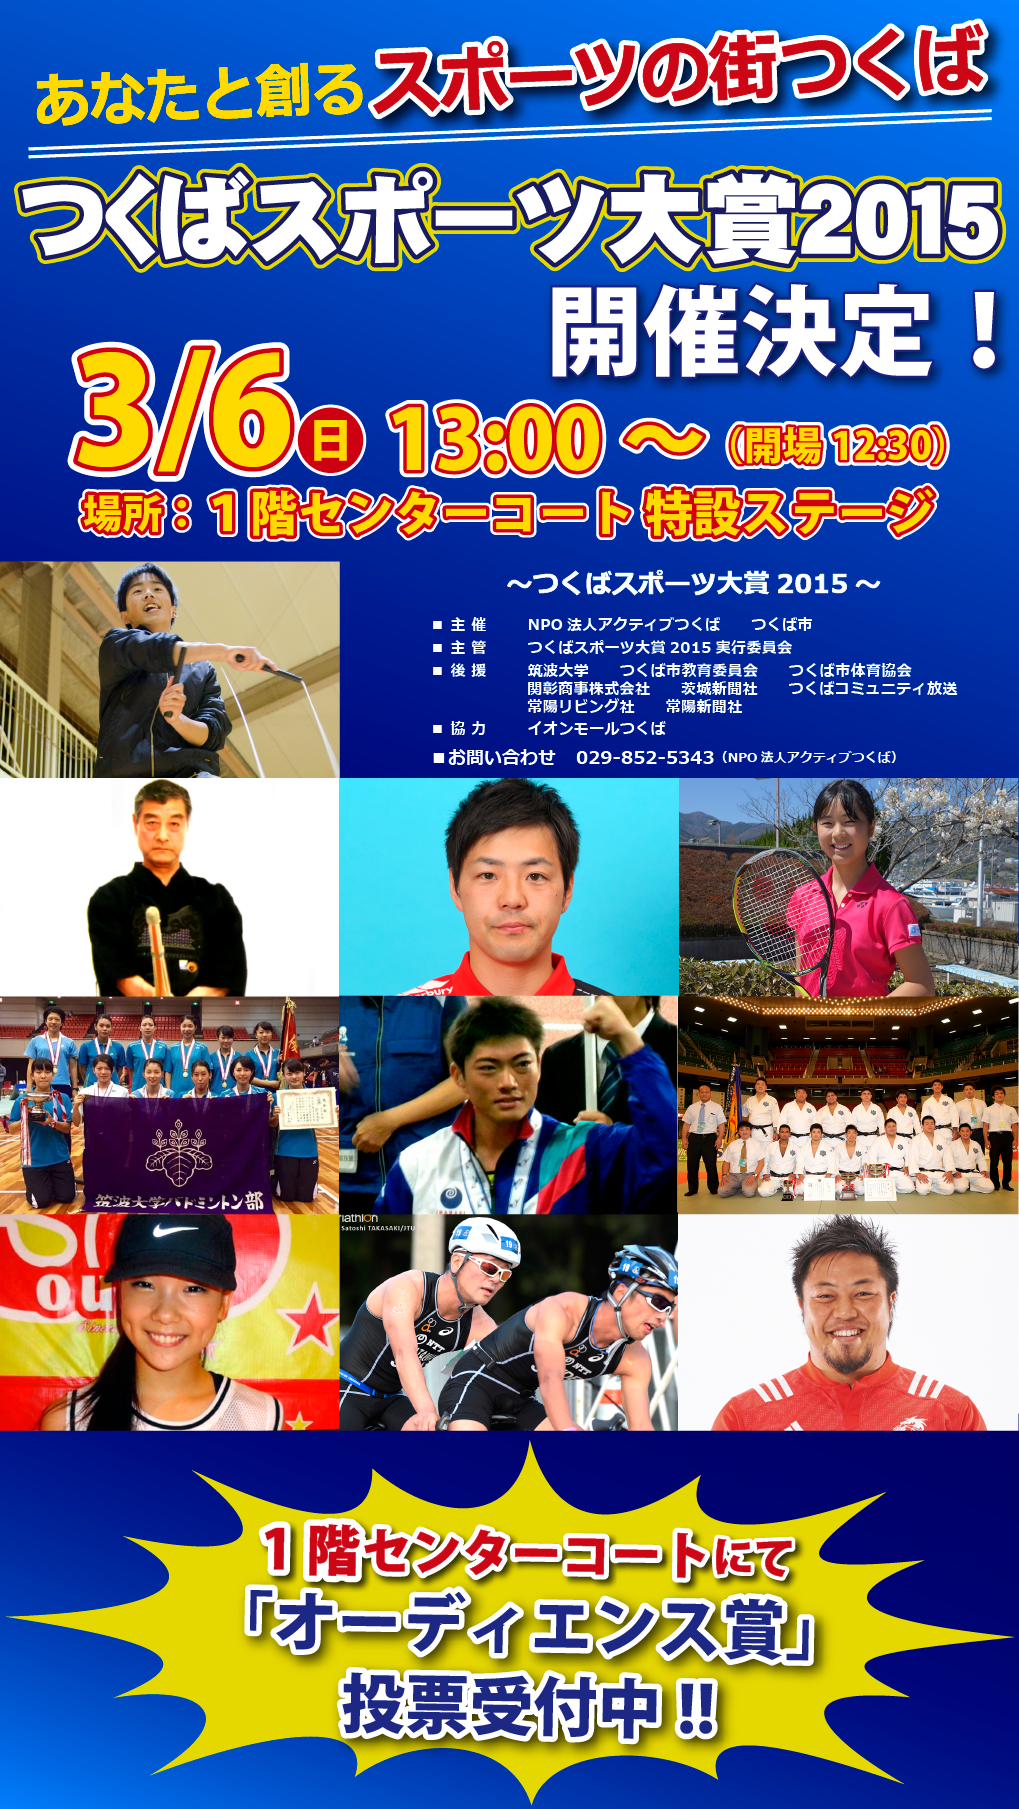 TsukubaSportAward2015.png